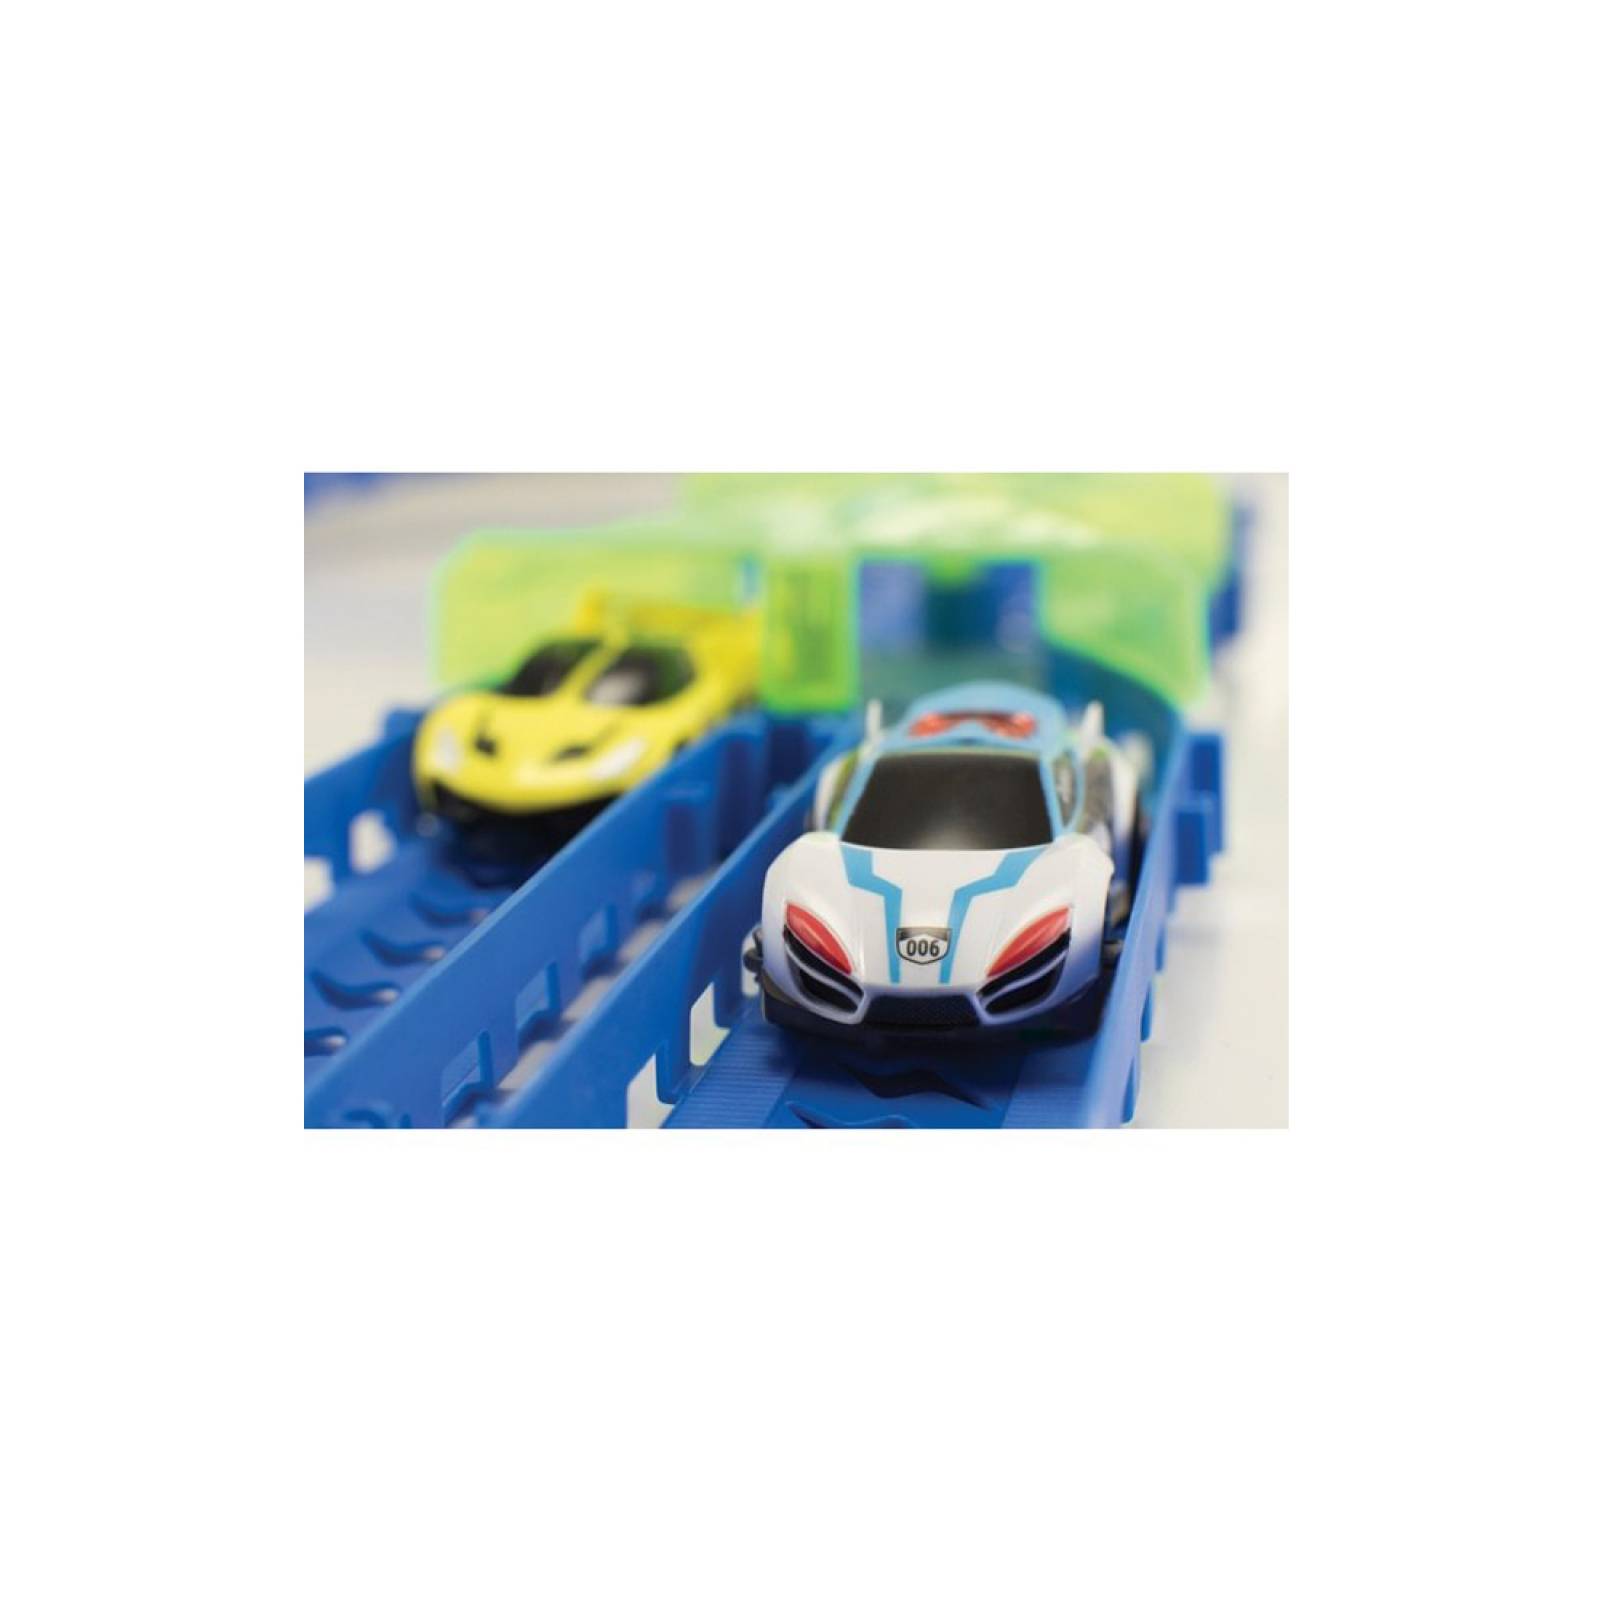 Auto Juguete Champ 200x con Sensor de Onda Wave Racer Toys